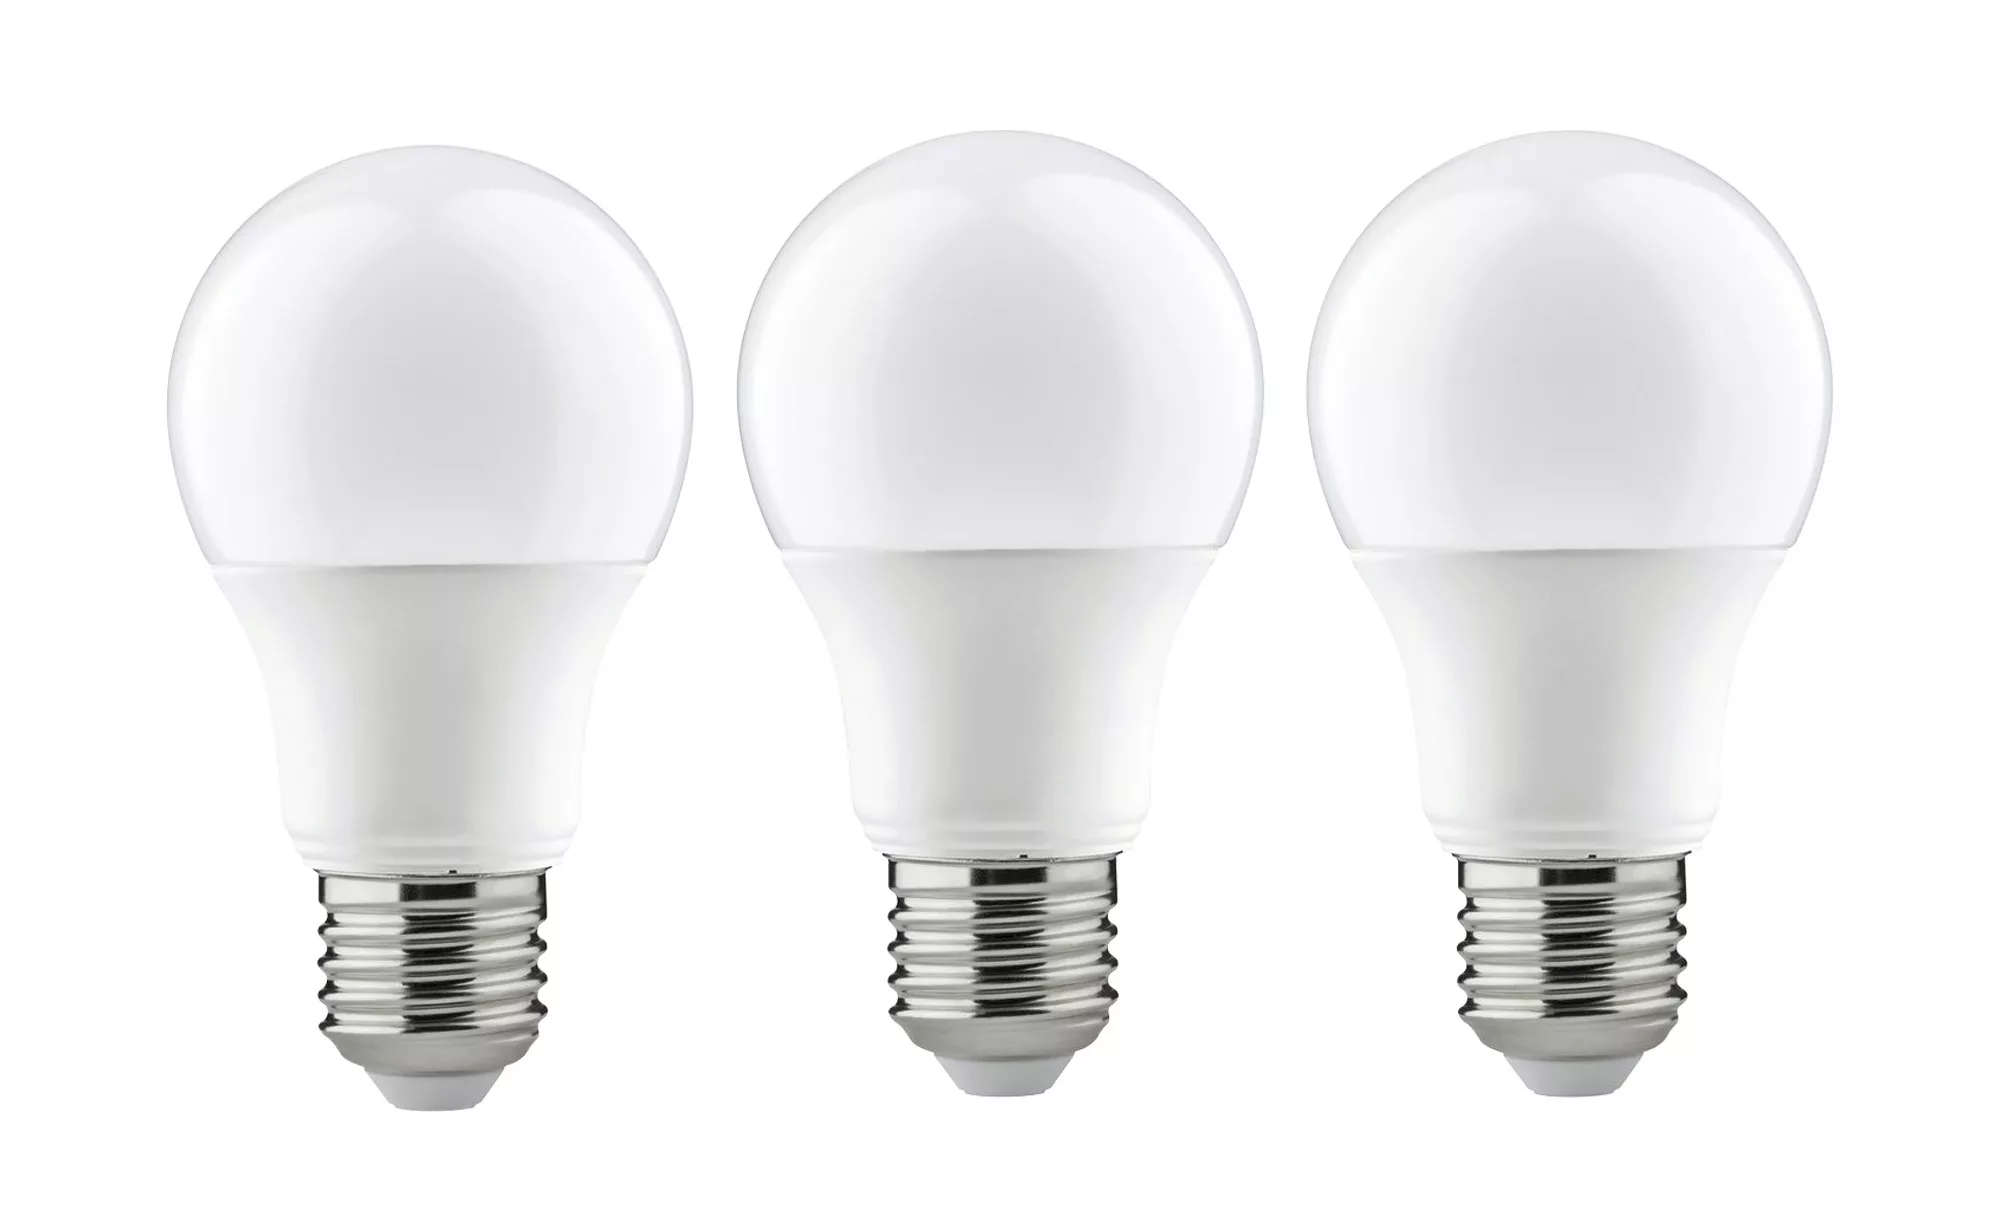 LED 3-er Pack, AGL E27 6,5W, 470lm, 2700K - weiß - 11 cm - Lampen & Leuchte günstig online kaufen